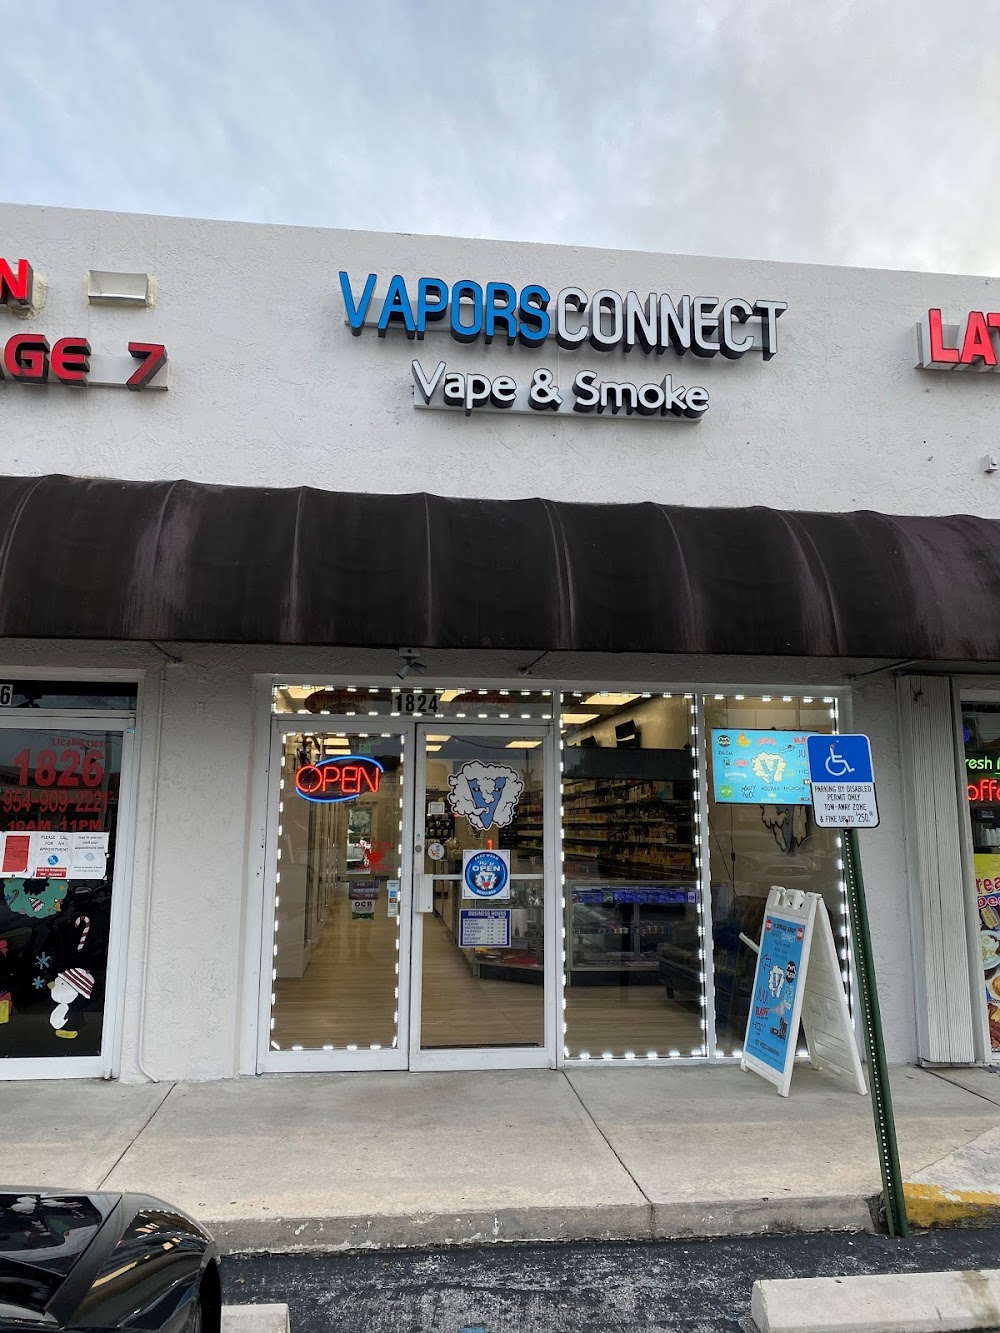 Vapors Connect Vape & Smoke Shop